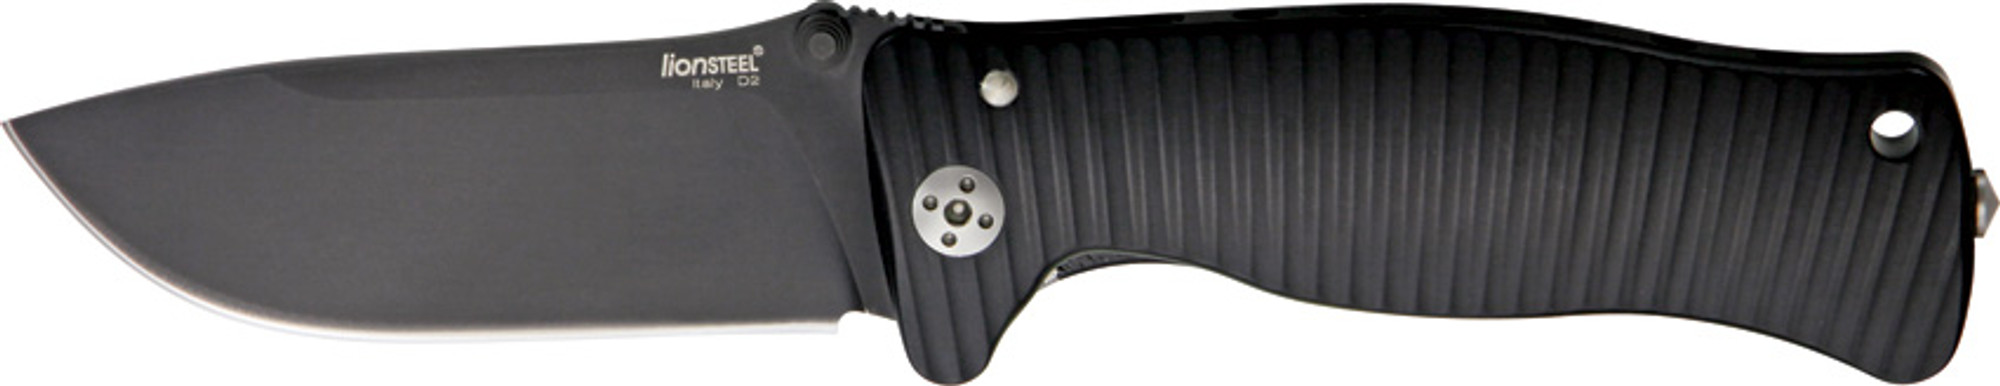 Lion Steel SR1ABB Molletta - Black Aluminum Handle, Black Blade